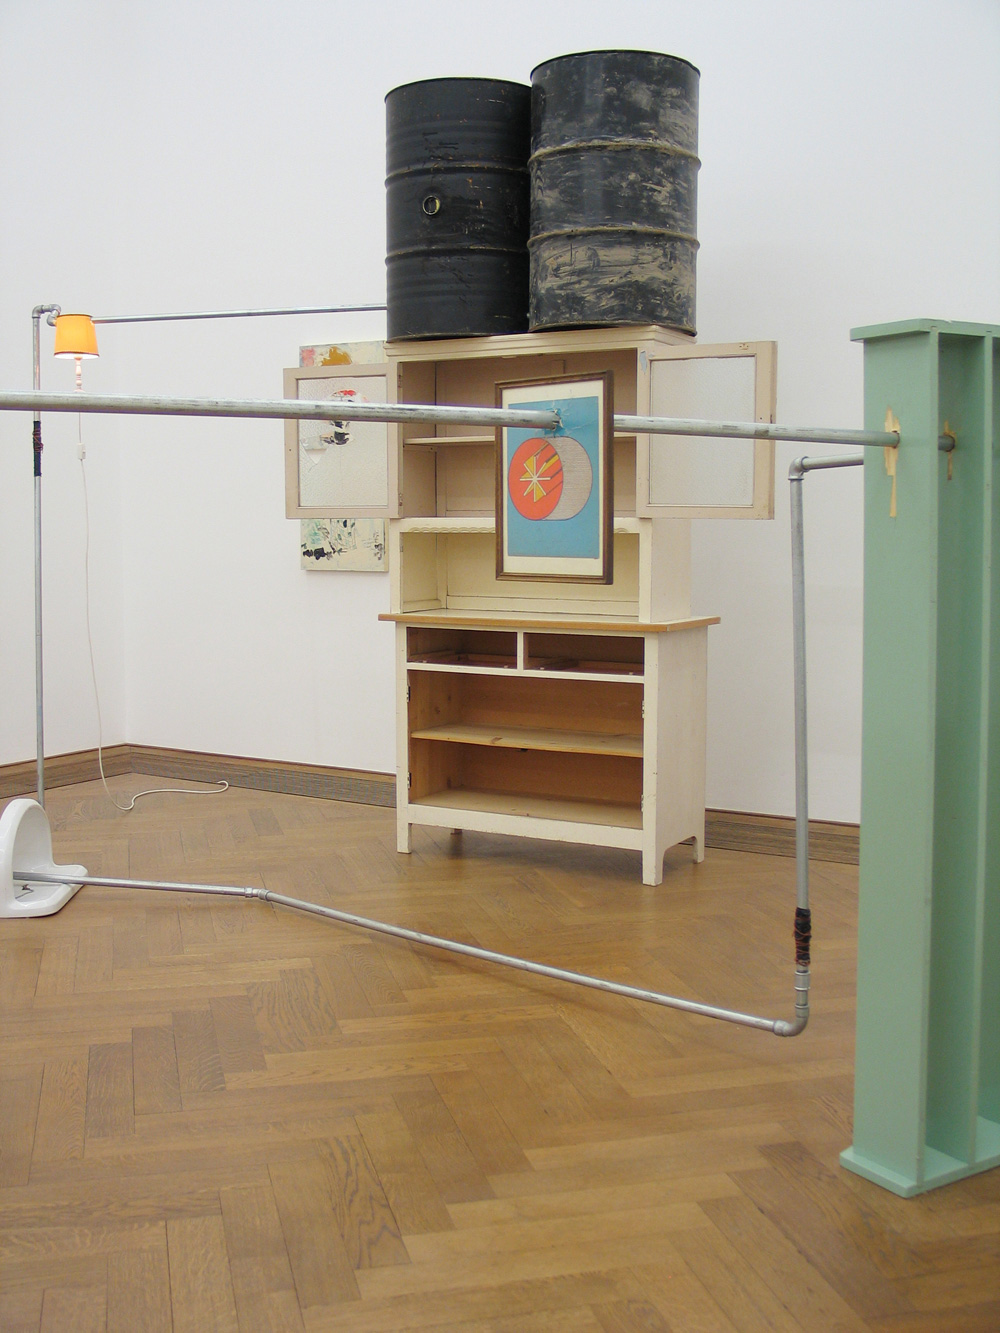 Galerie Barbara Thumm \ Diango Hernández  &#8211; Revolution  &#8211; Kunsthalle Basel, Switzerland